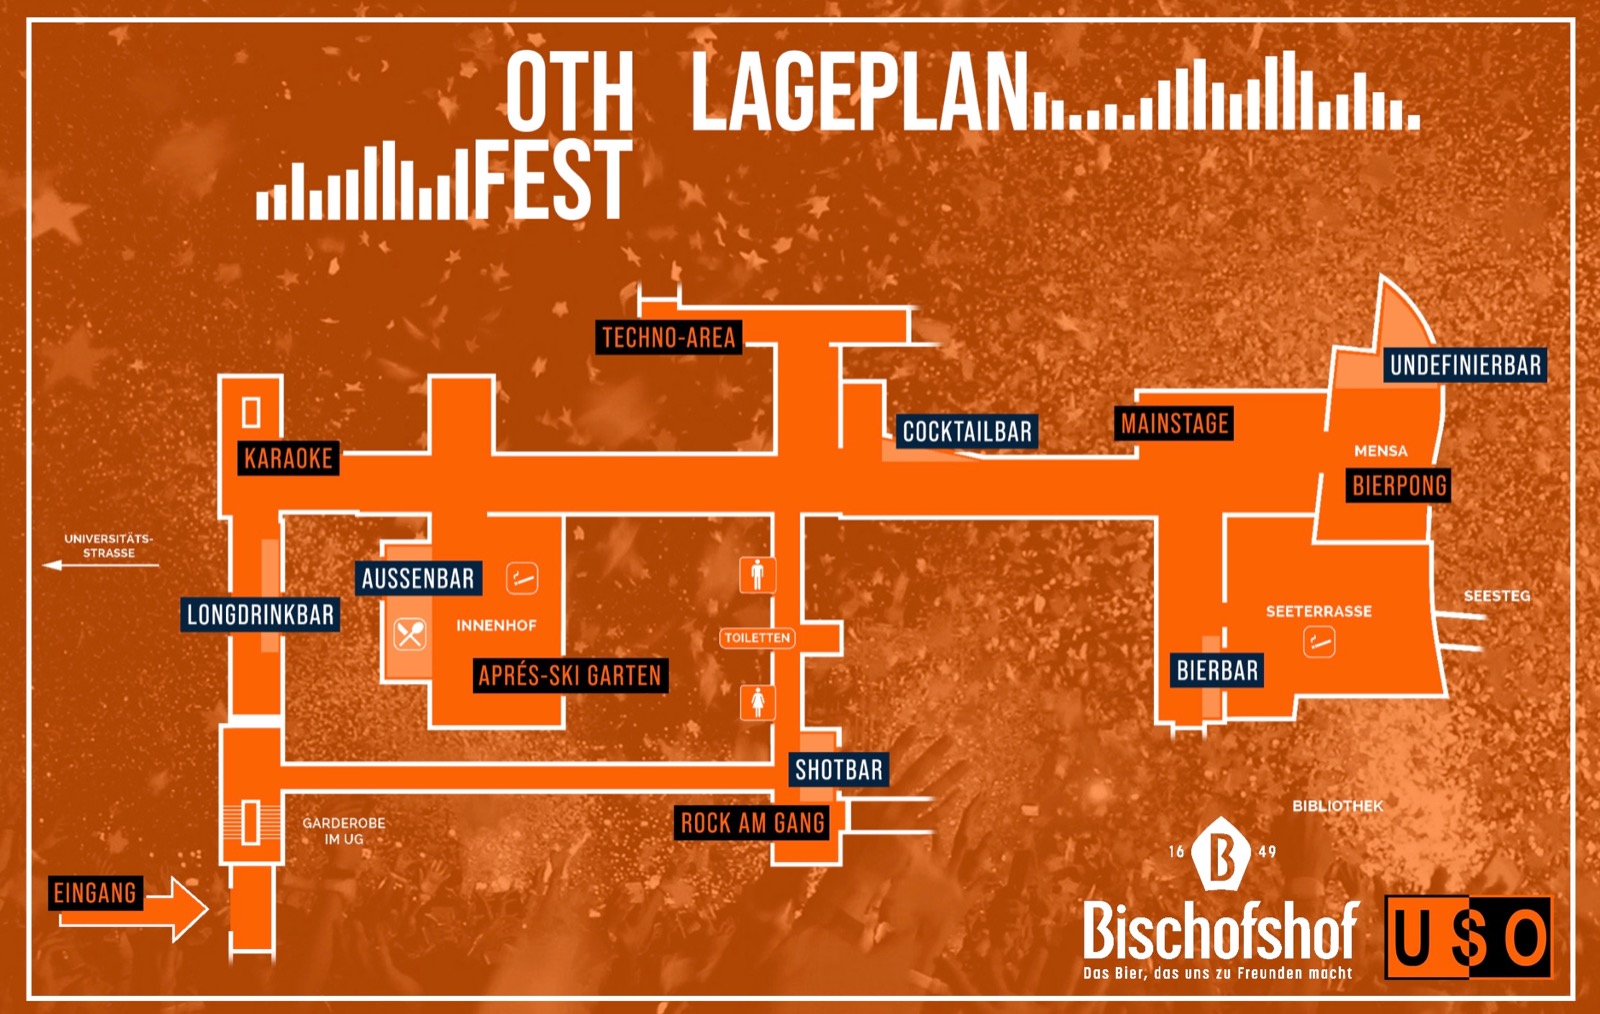 Lageplan OTH-Fest